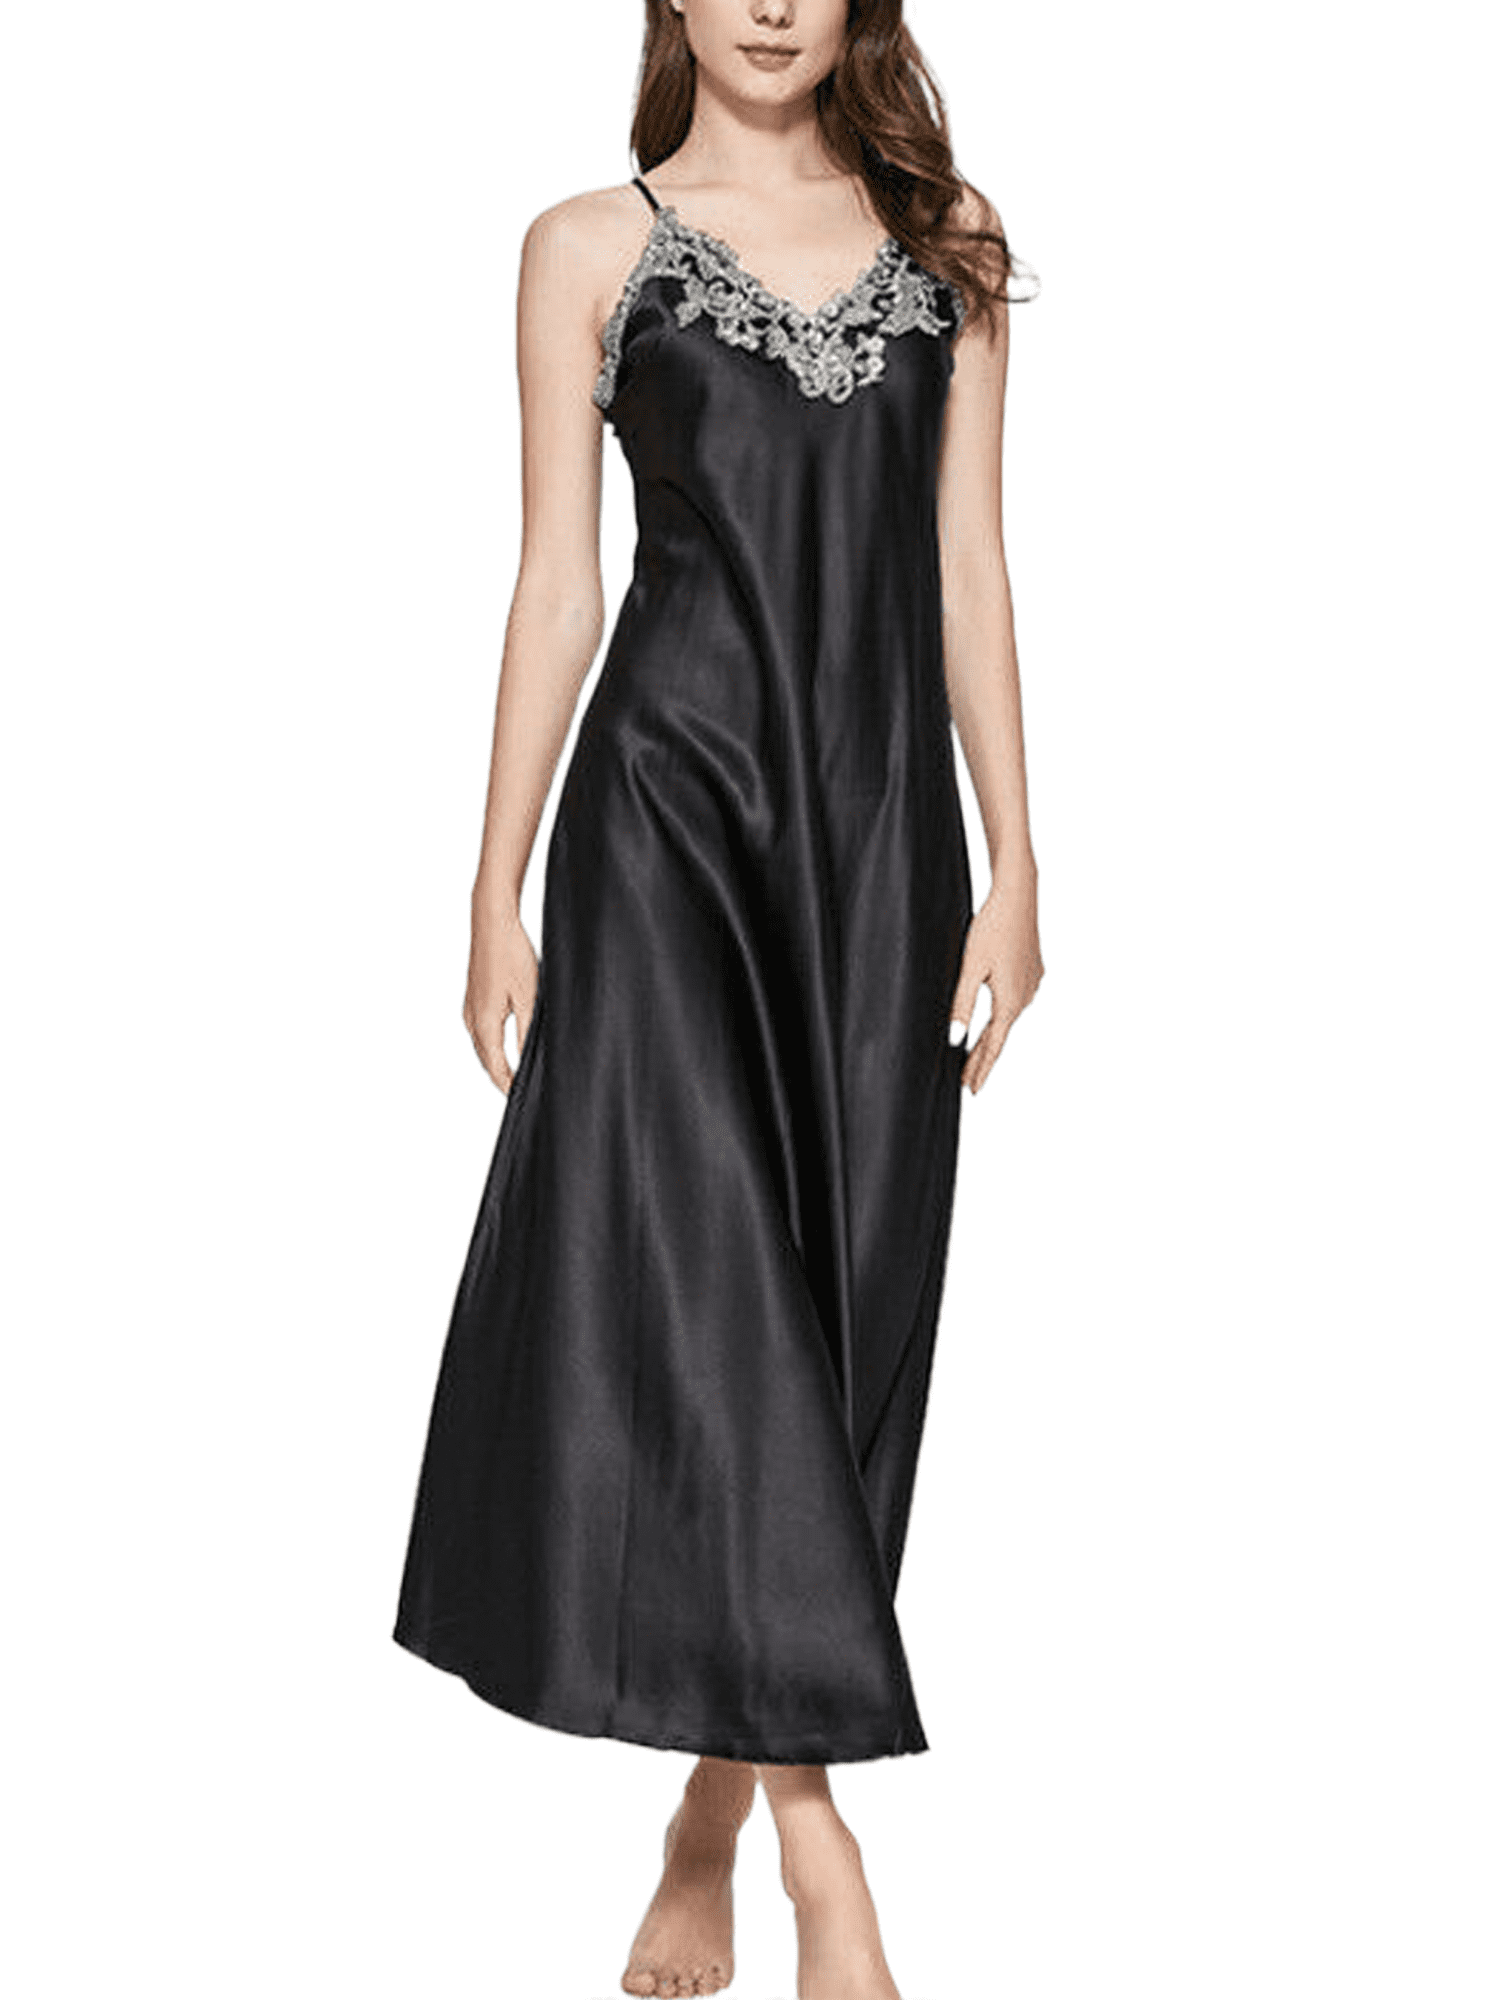 JYYYBF Women's Camisole Nightgown Silk Satin Nightdress Maxi Full